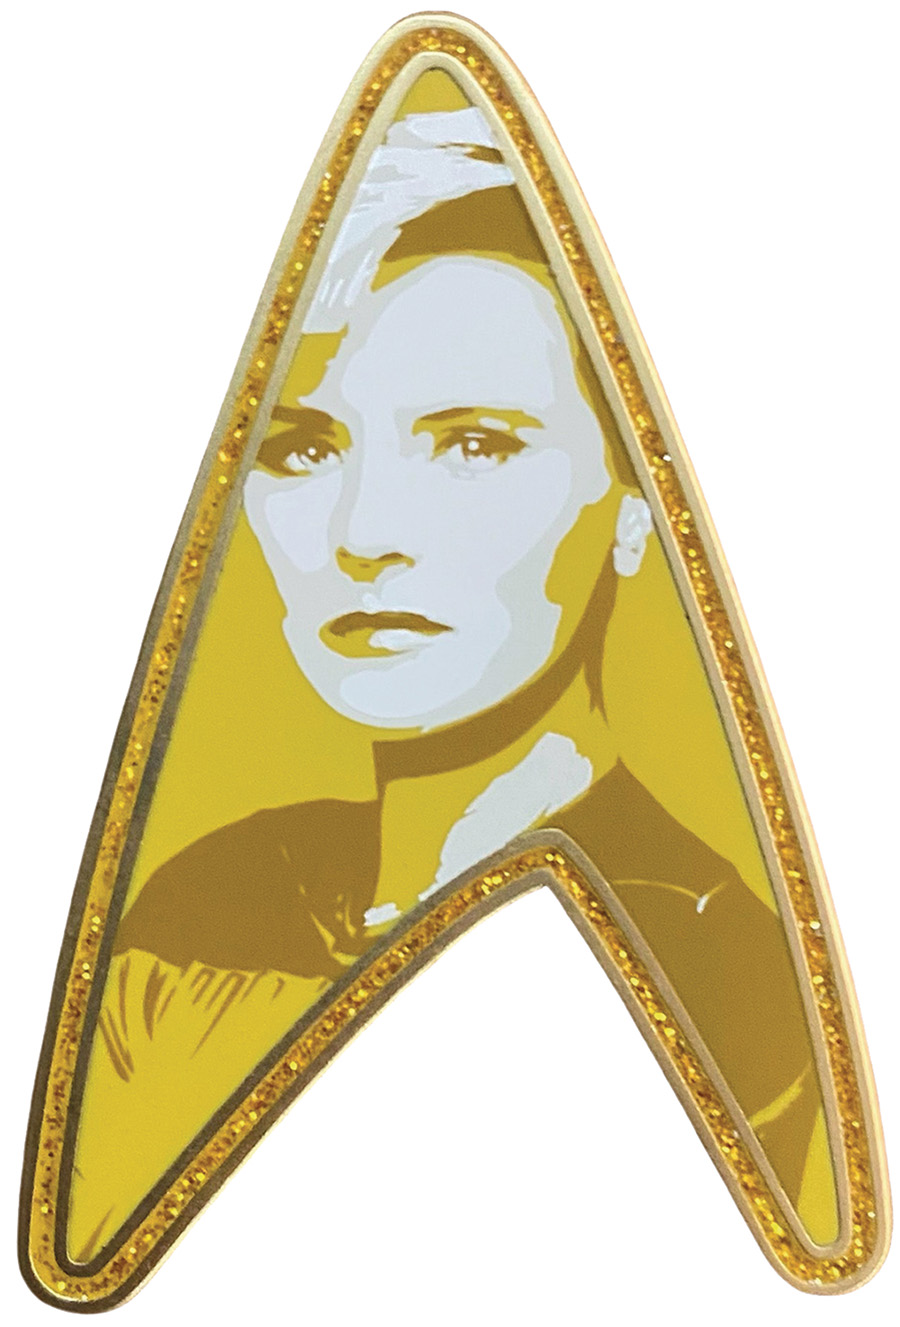 Star Trek The Next Generation Pin - Tasha Yar